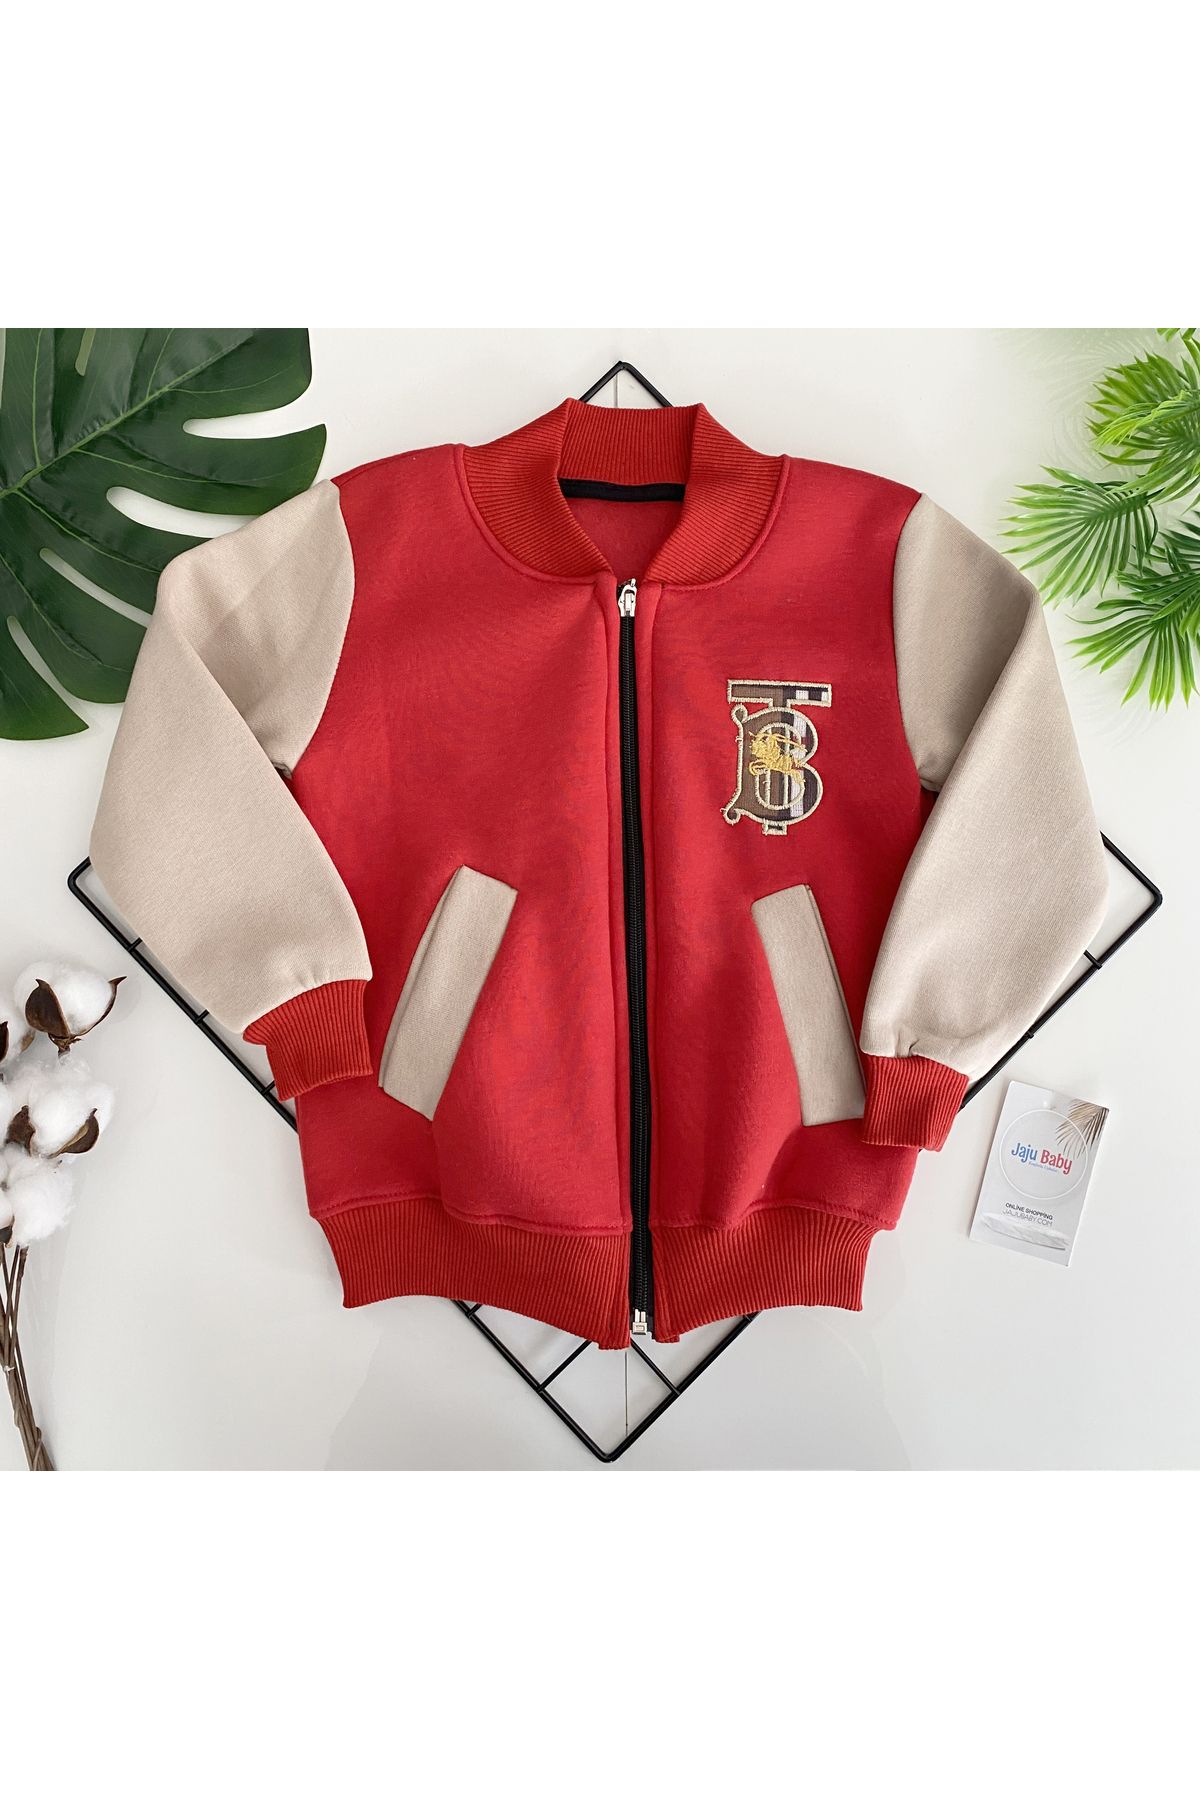 Jaju Baby Jacket - Red - Regular fit - Trendyol